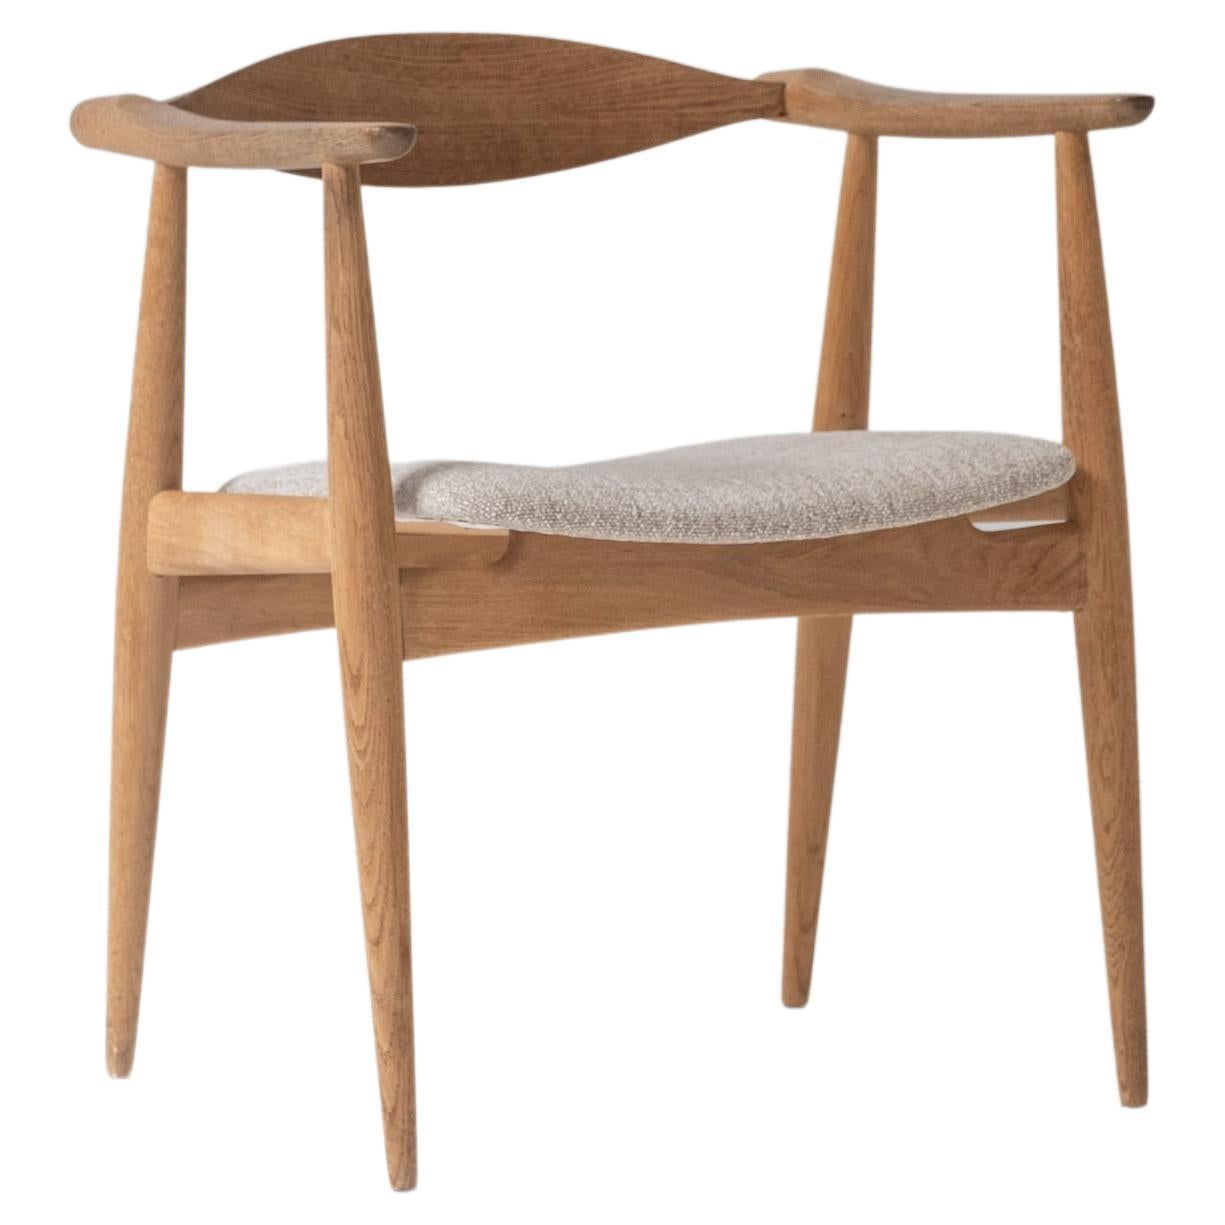 Early CH35 chair designed by Hans Wegner for Carl Hansen and Son, Denmark 1950’s